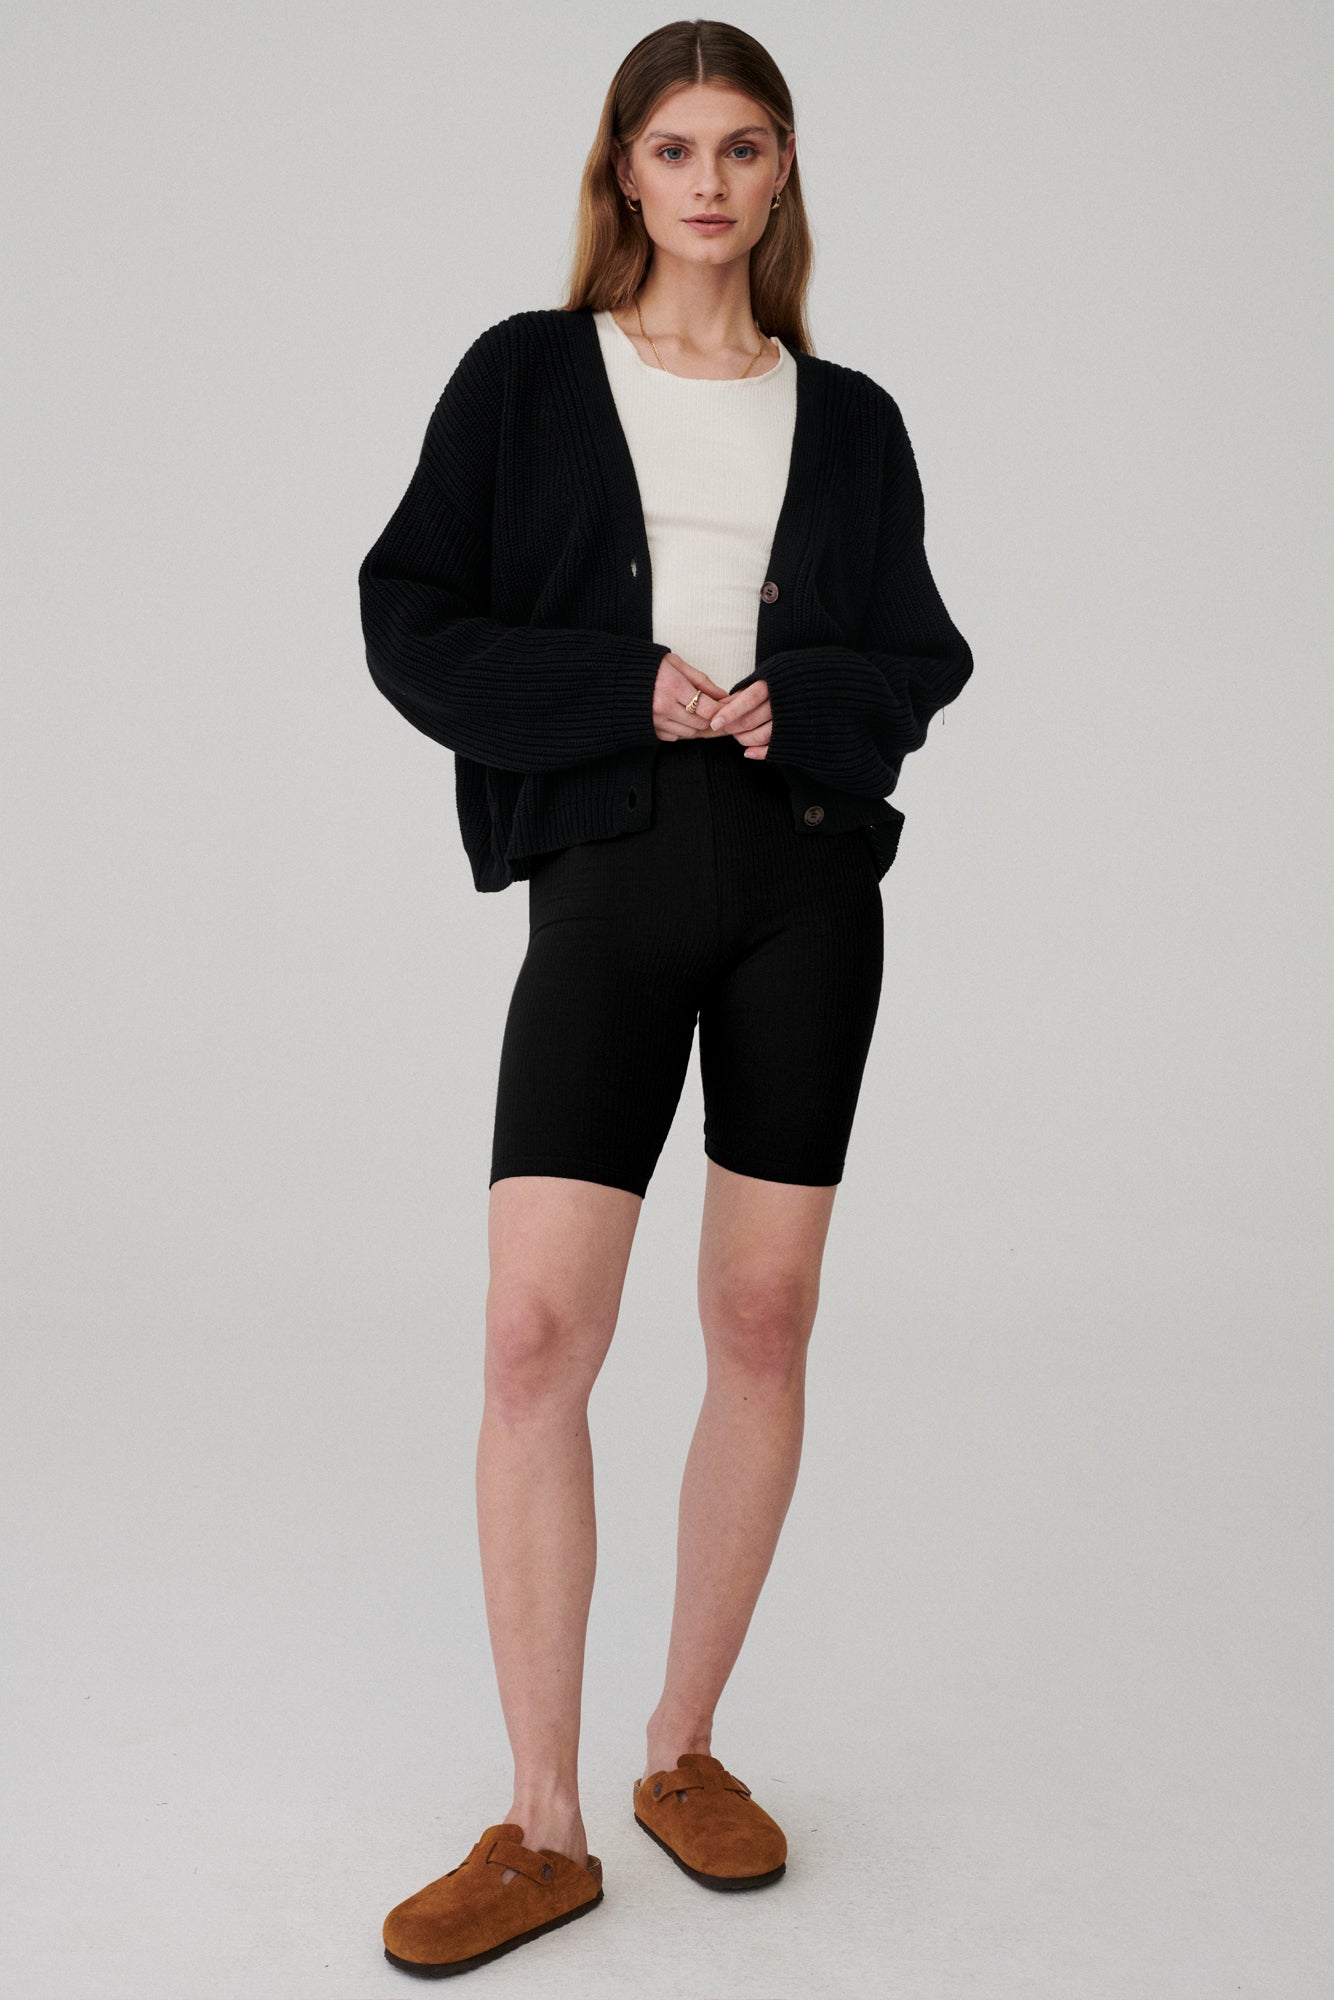 Biker shorts in organic cotton / 08 / 03 / onyx black